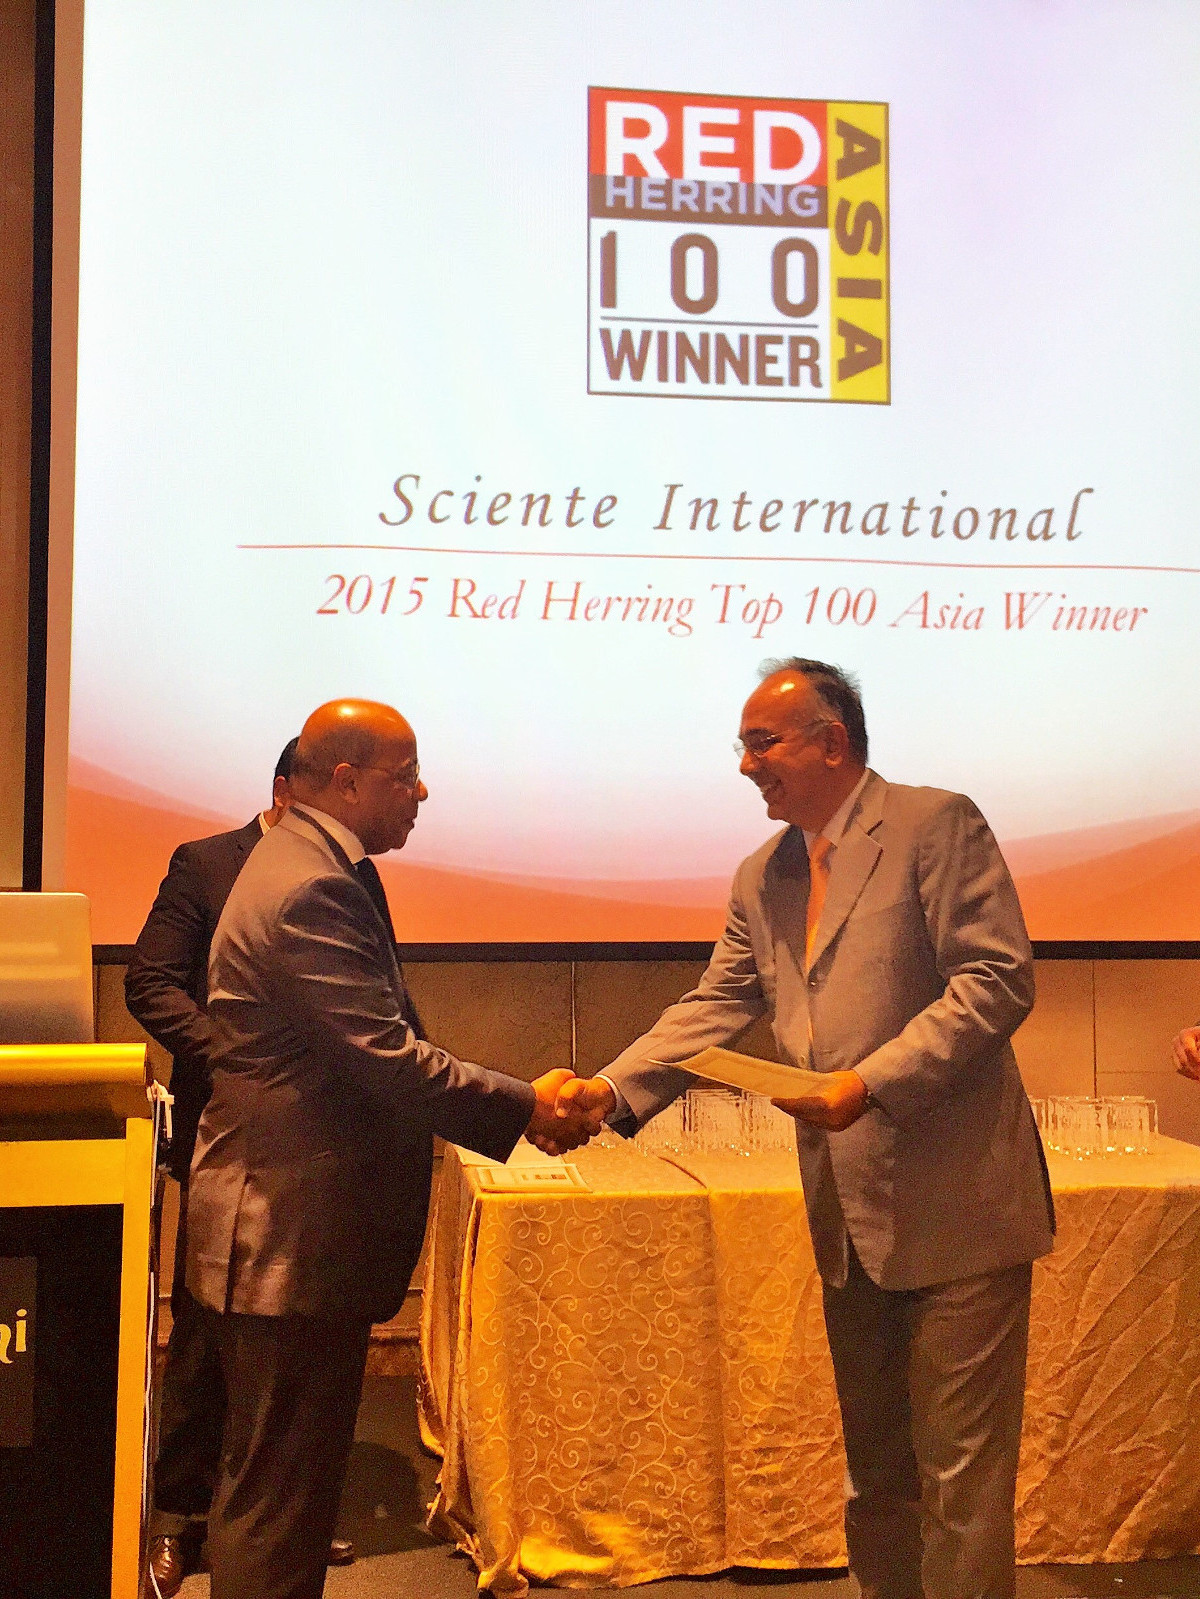 Sciente International selected as a 2015 Red Herring Top 100 Asia